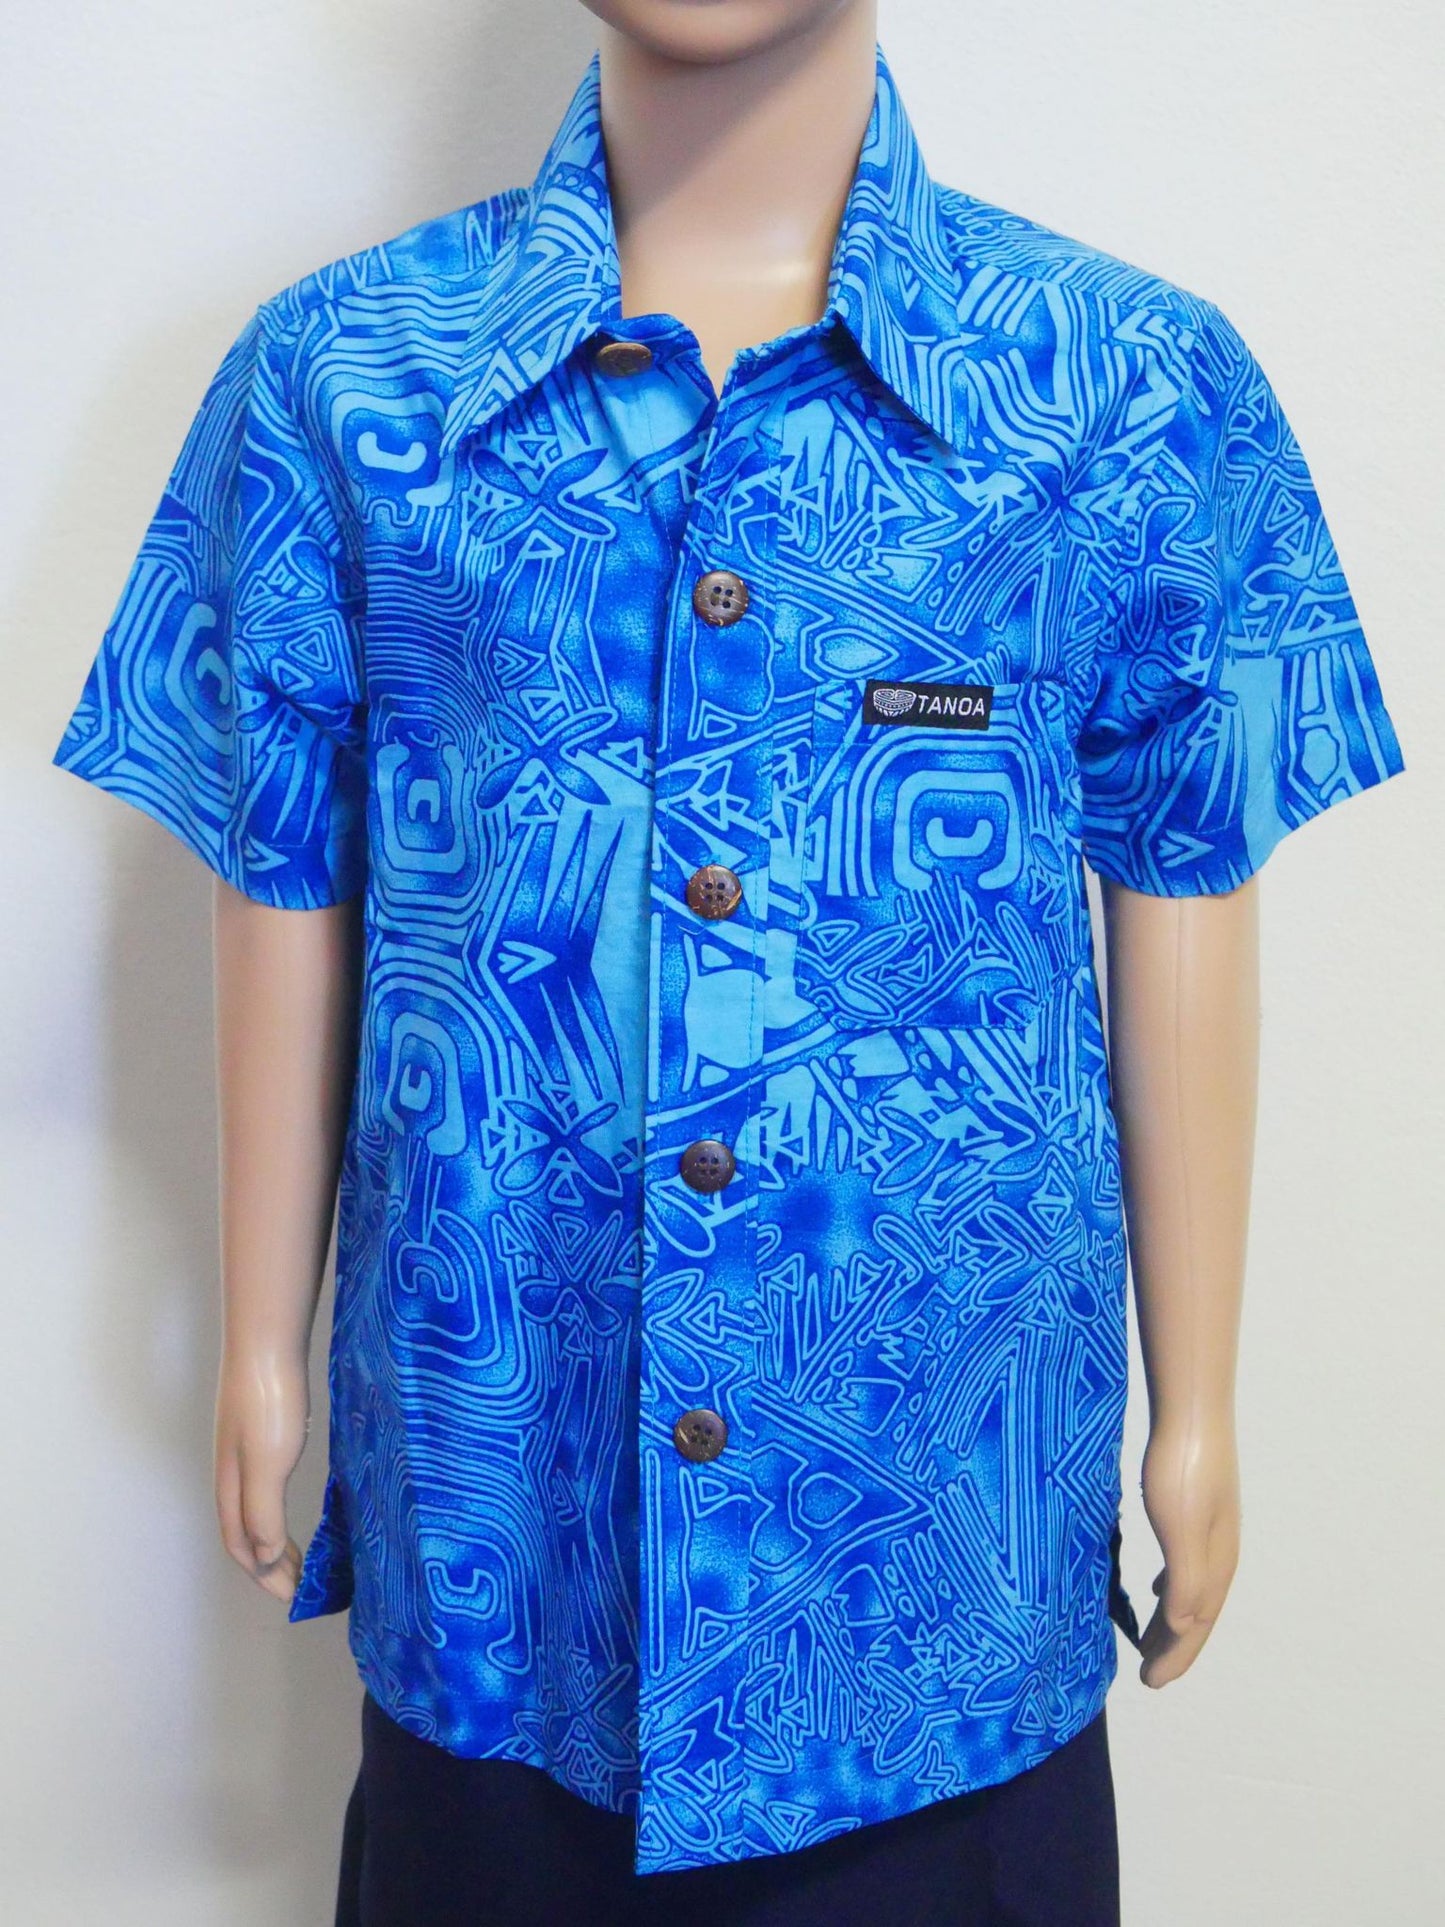 Tanoa Samoa Boy's Shirt (Ocean Blue)